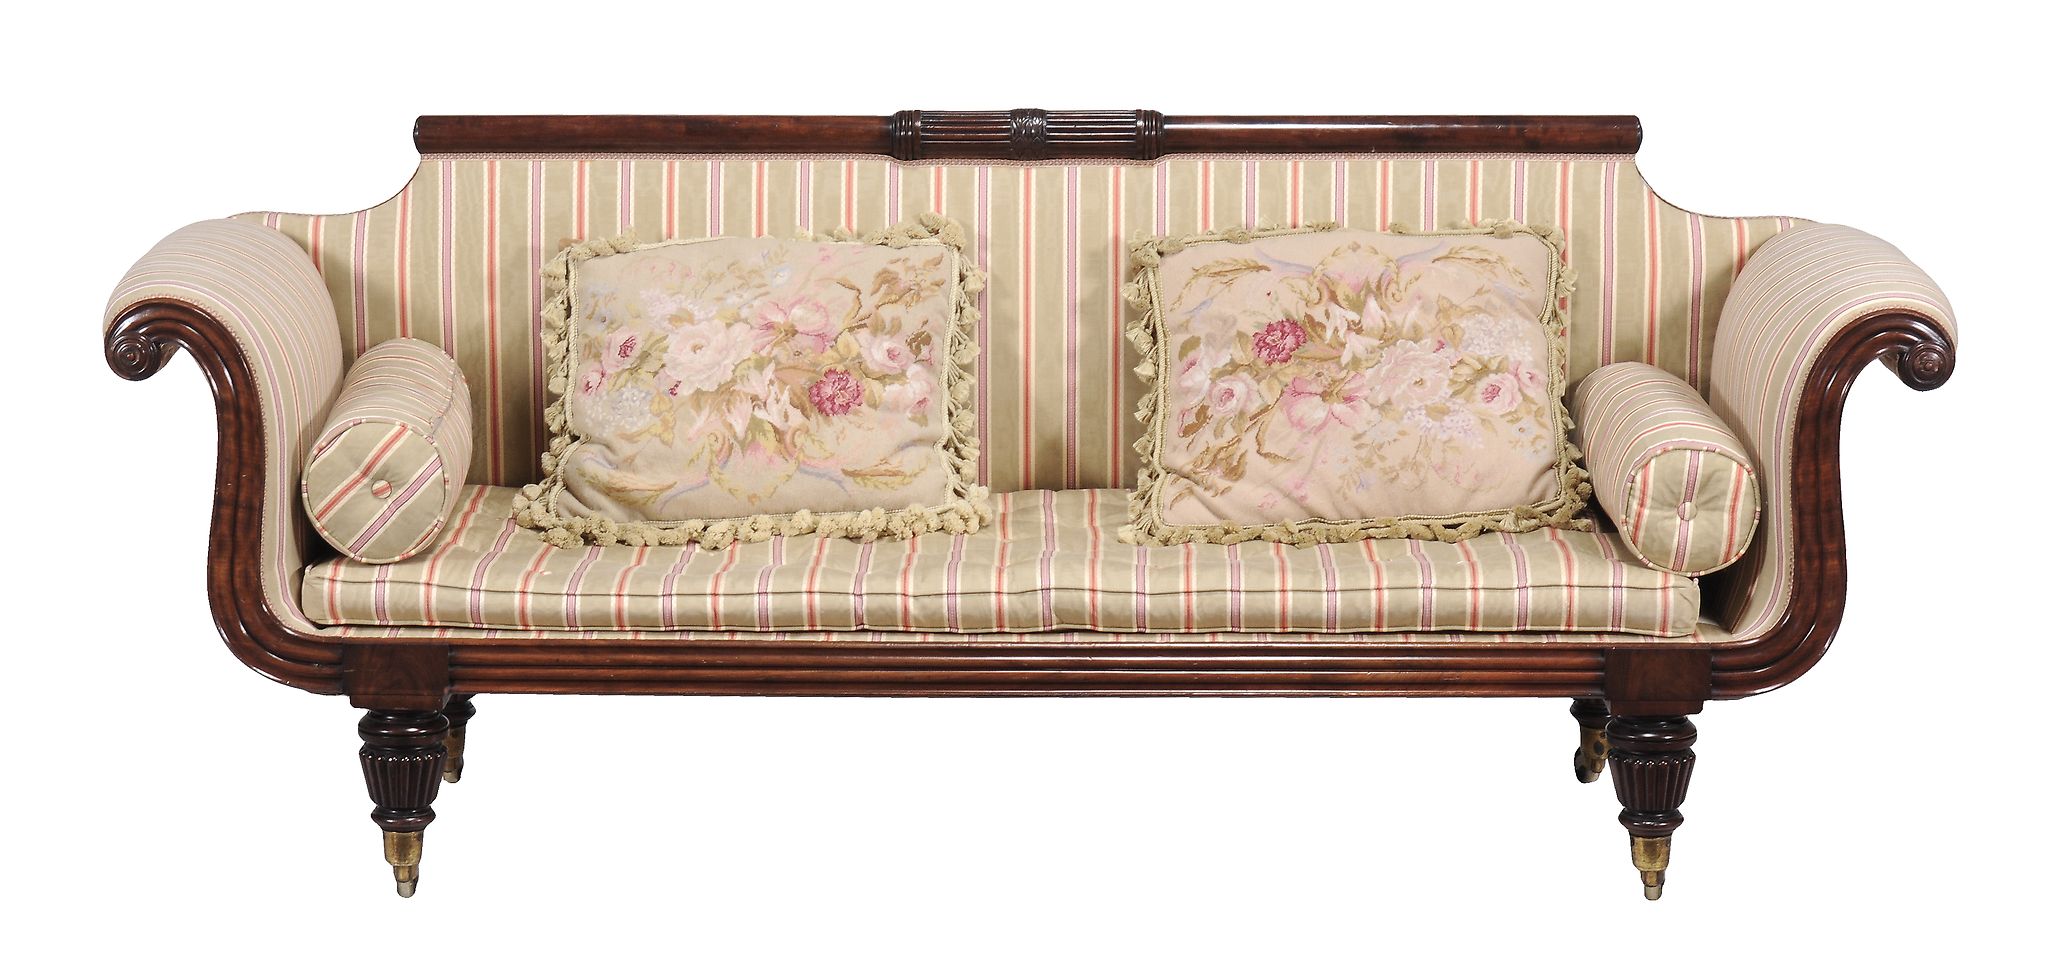 A Regency mahogany sofa,   circa 1815, the shaped rectangular back with turned terminals